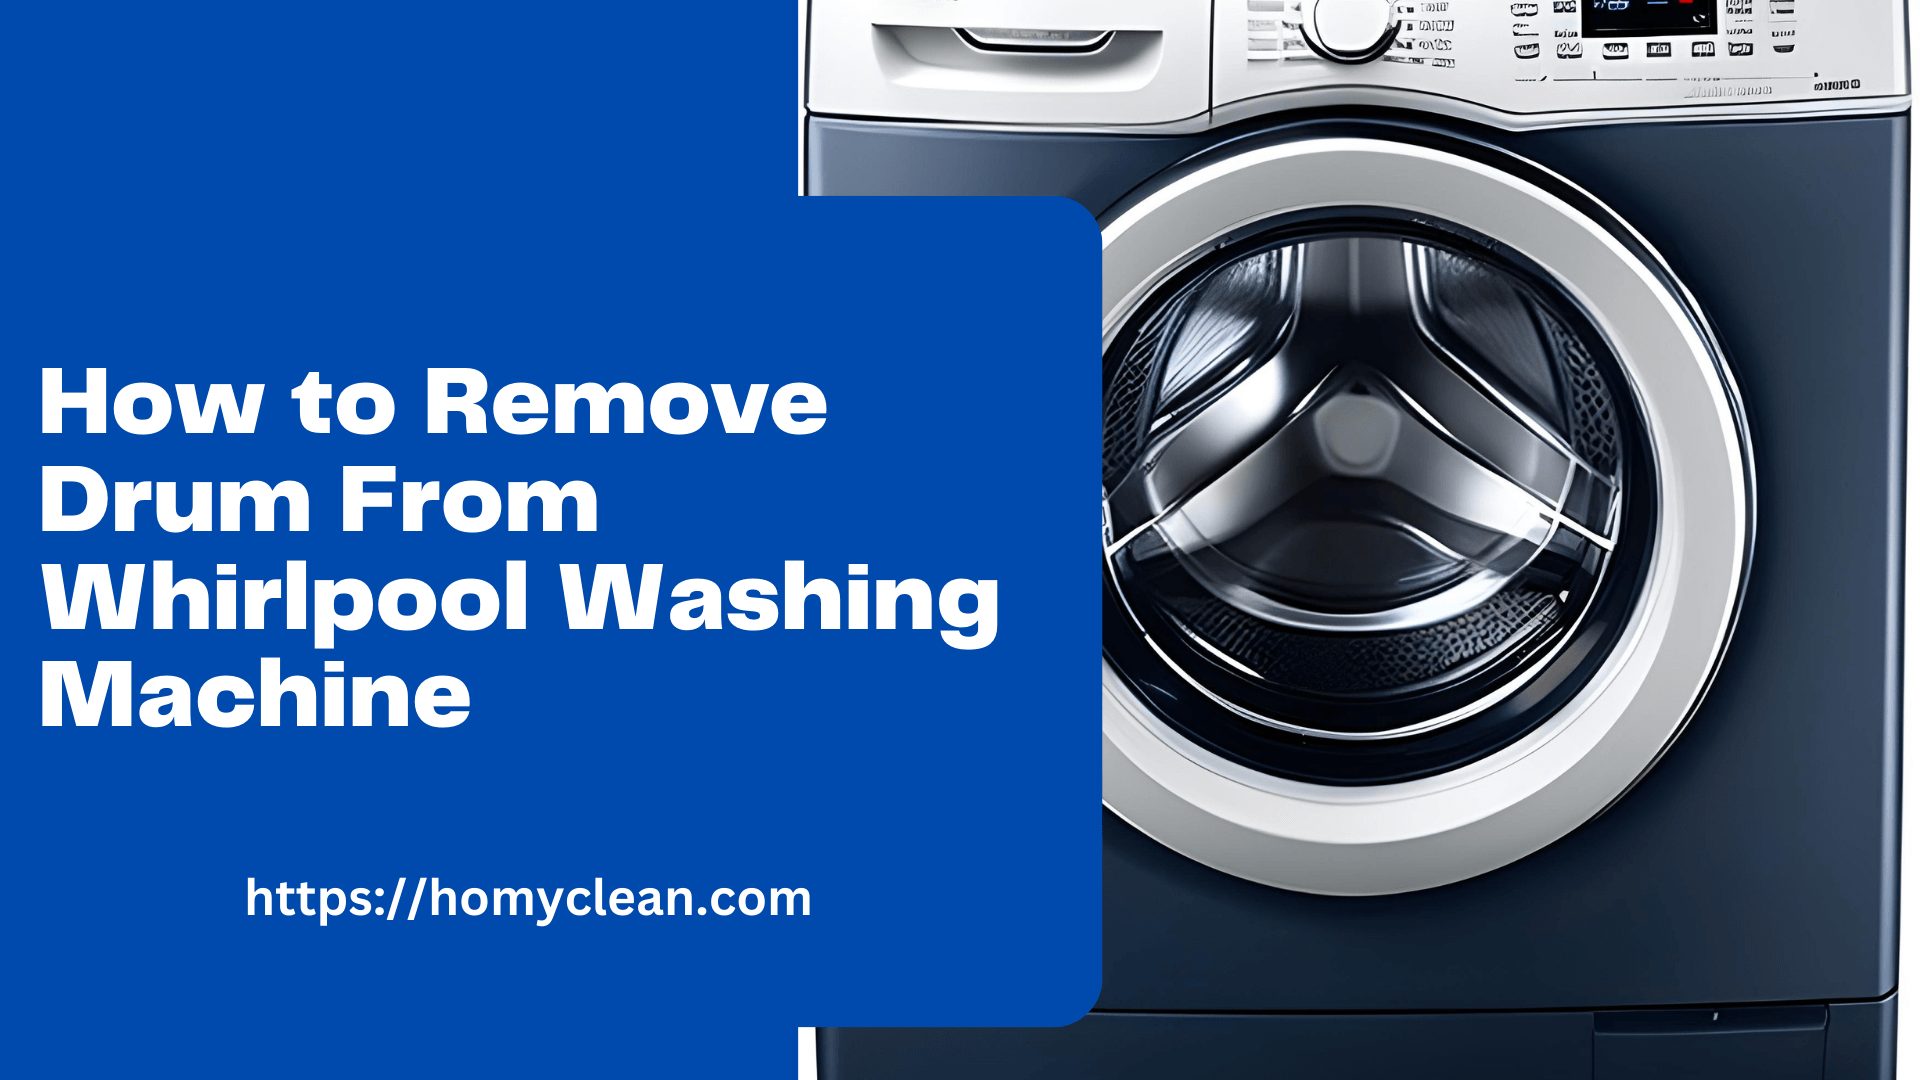 How to Remove Drum From Whirlpool Washing Machine